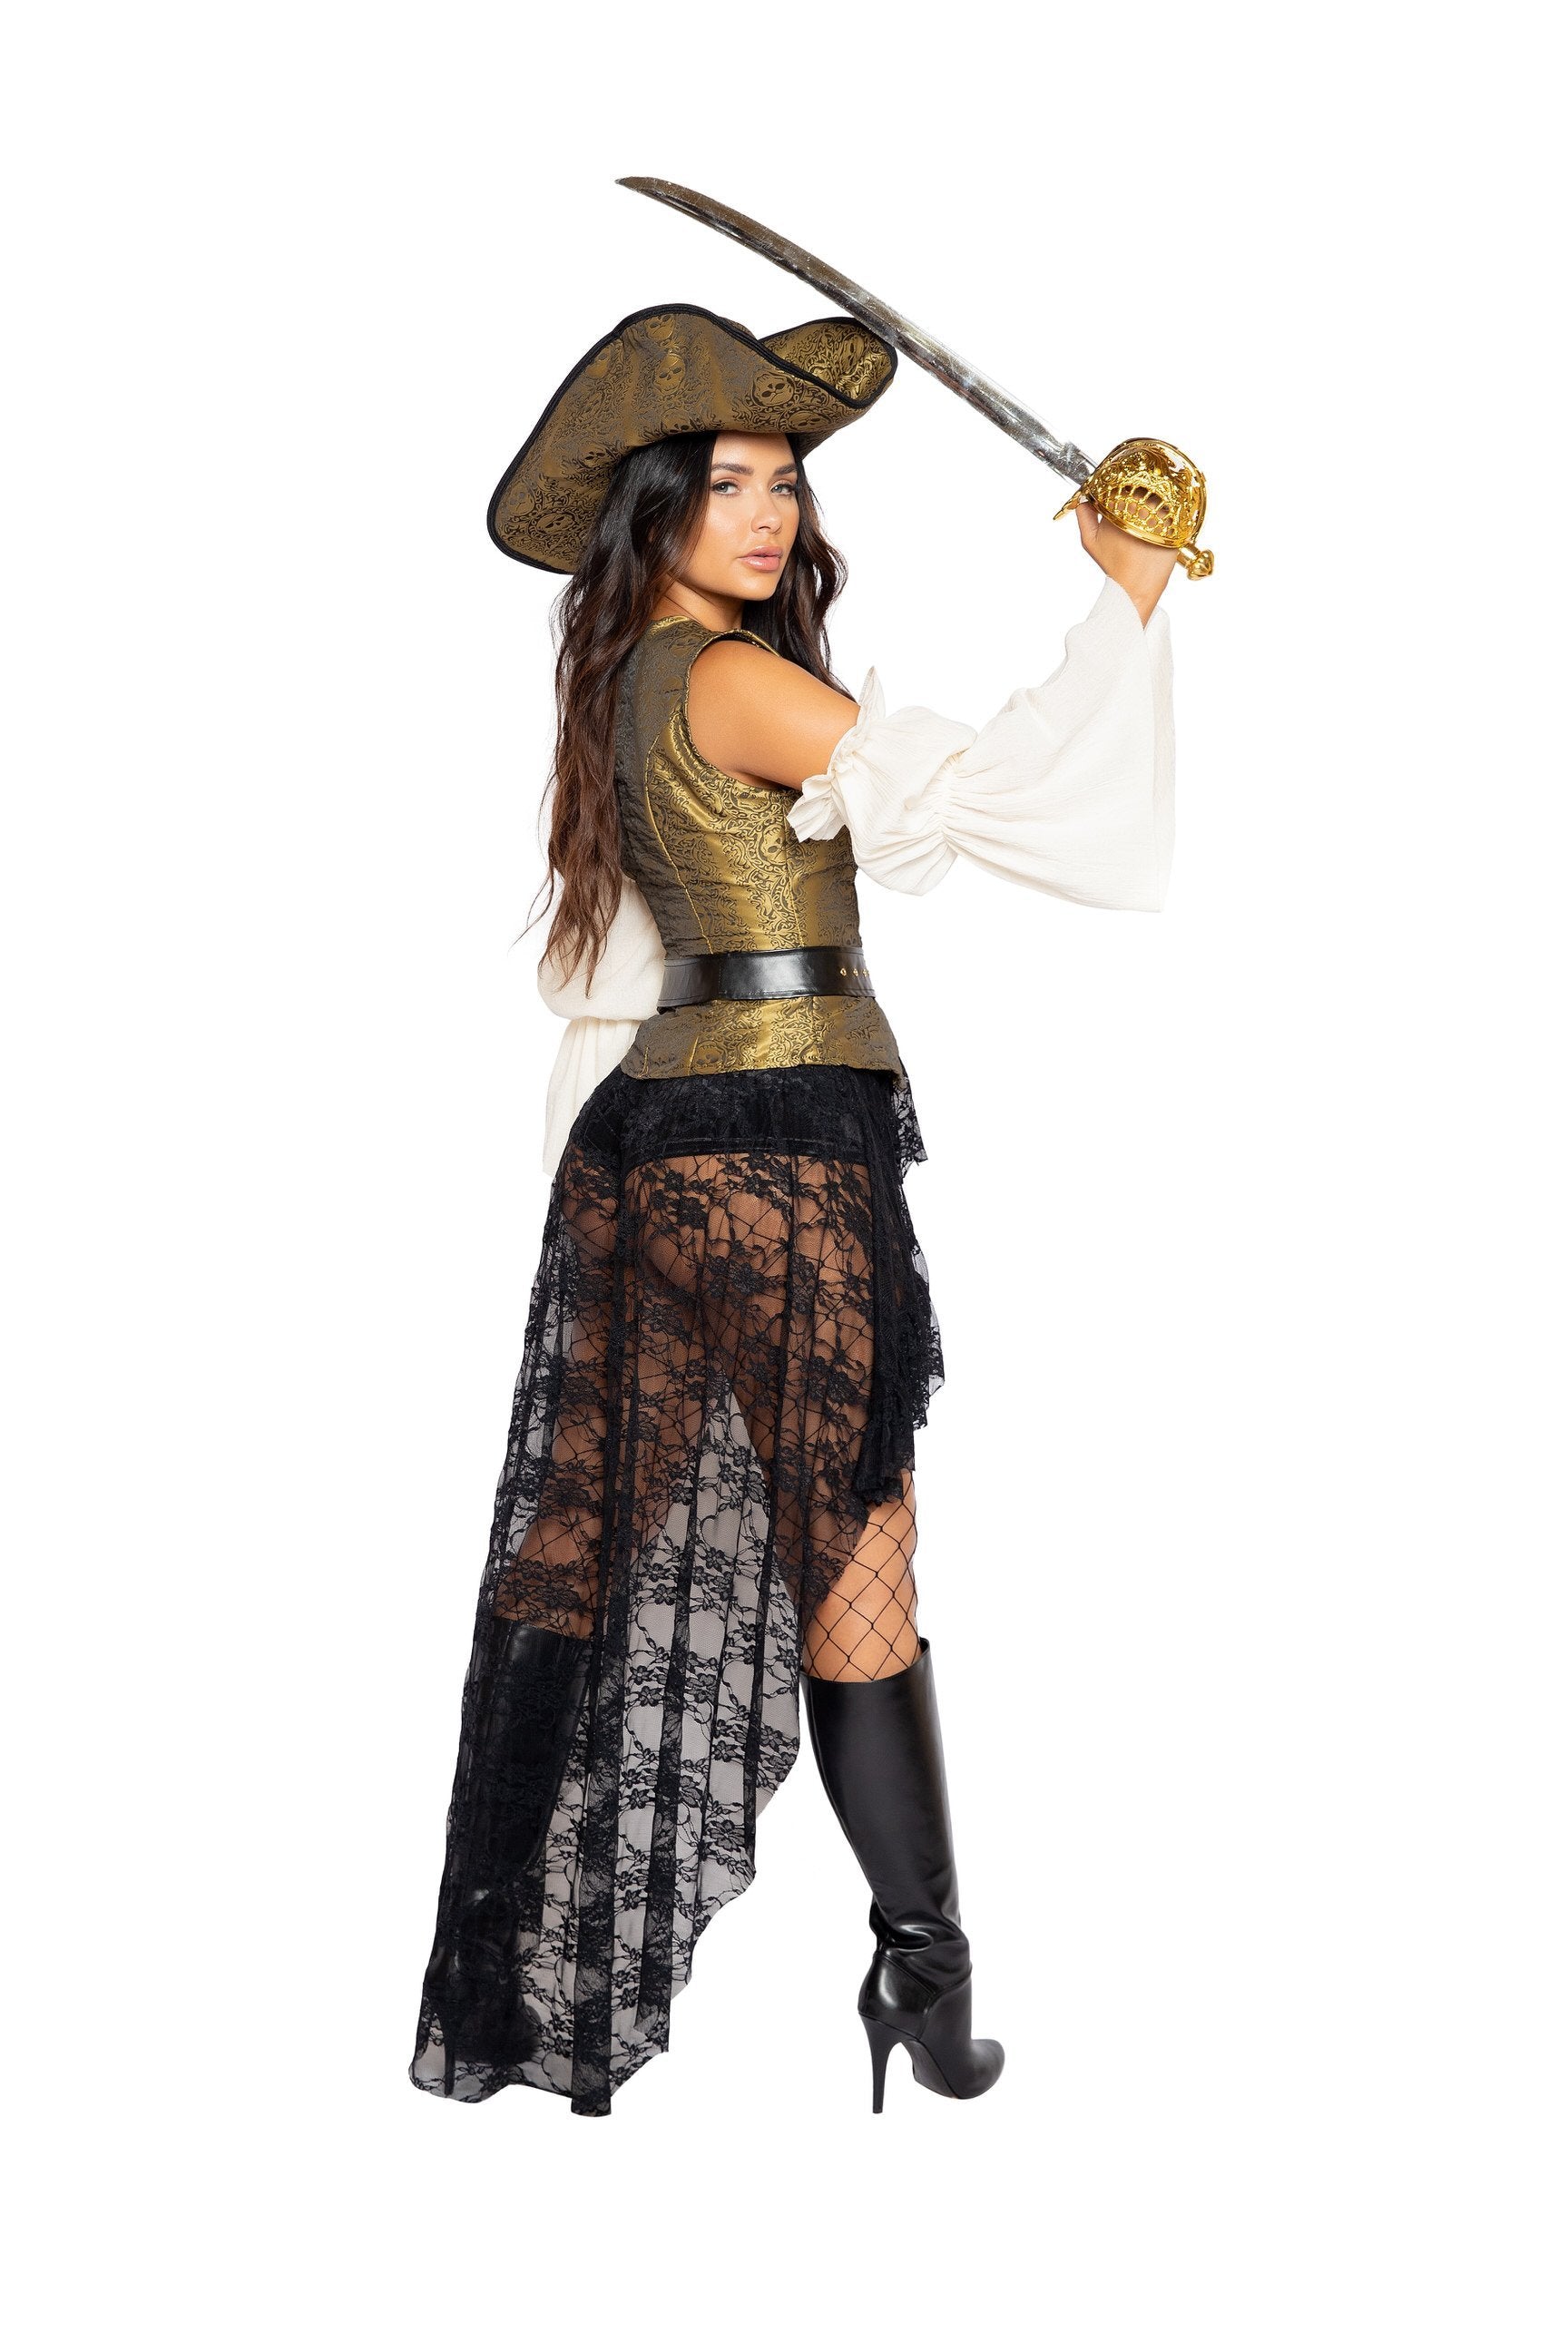 Roma Costume Costumes Small / Gold/Black/Beige 4980 - 6pc Pirate Queen Costume